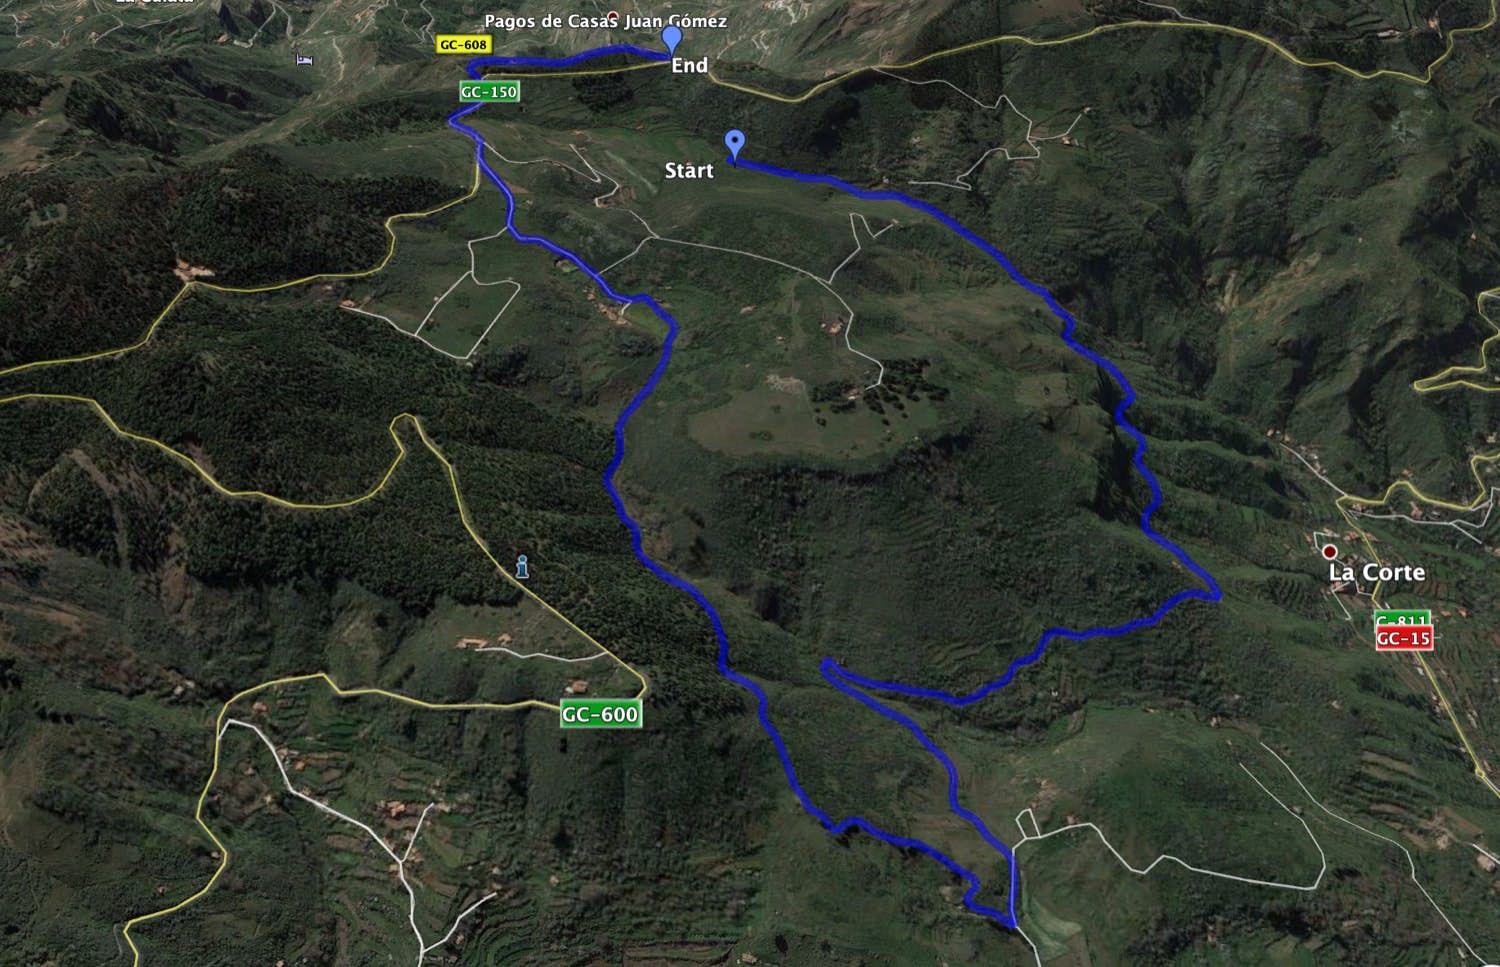 Track of the Becerra hike